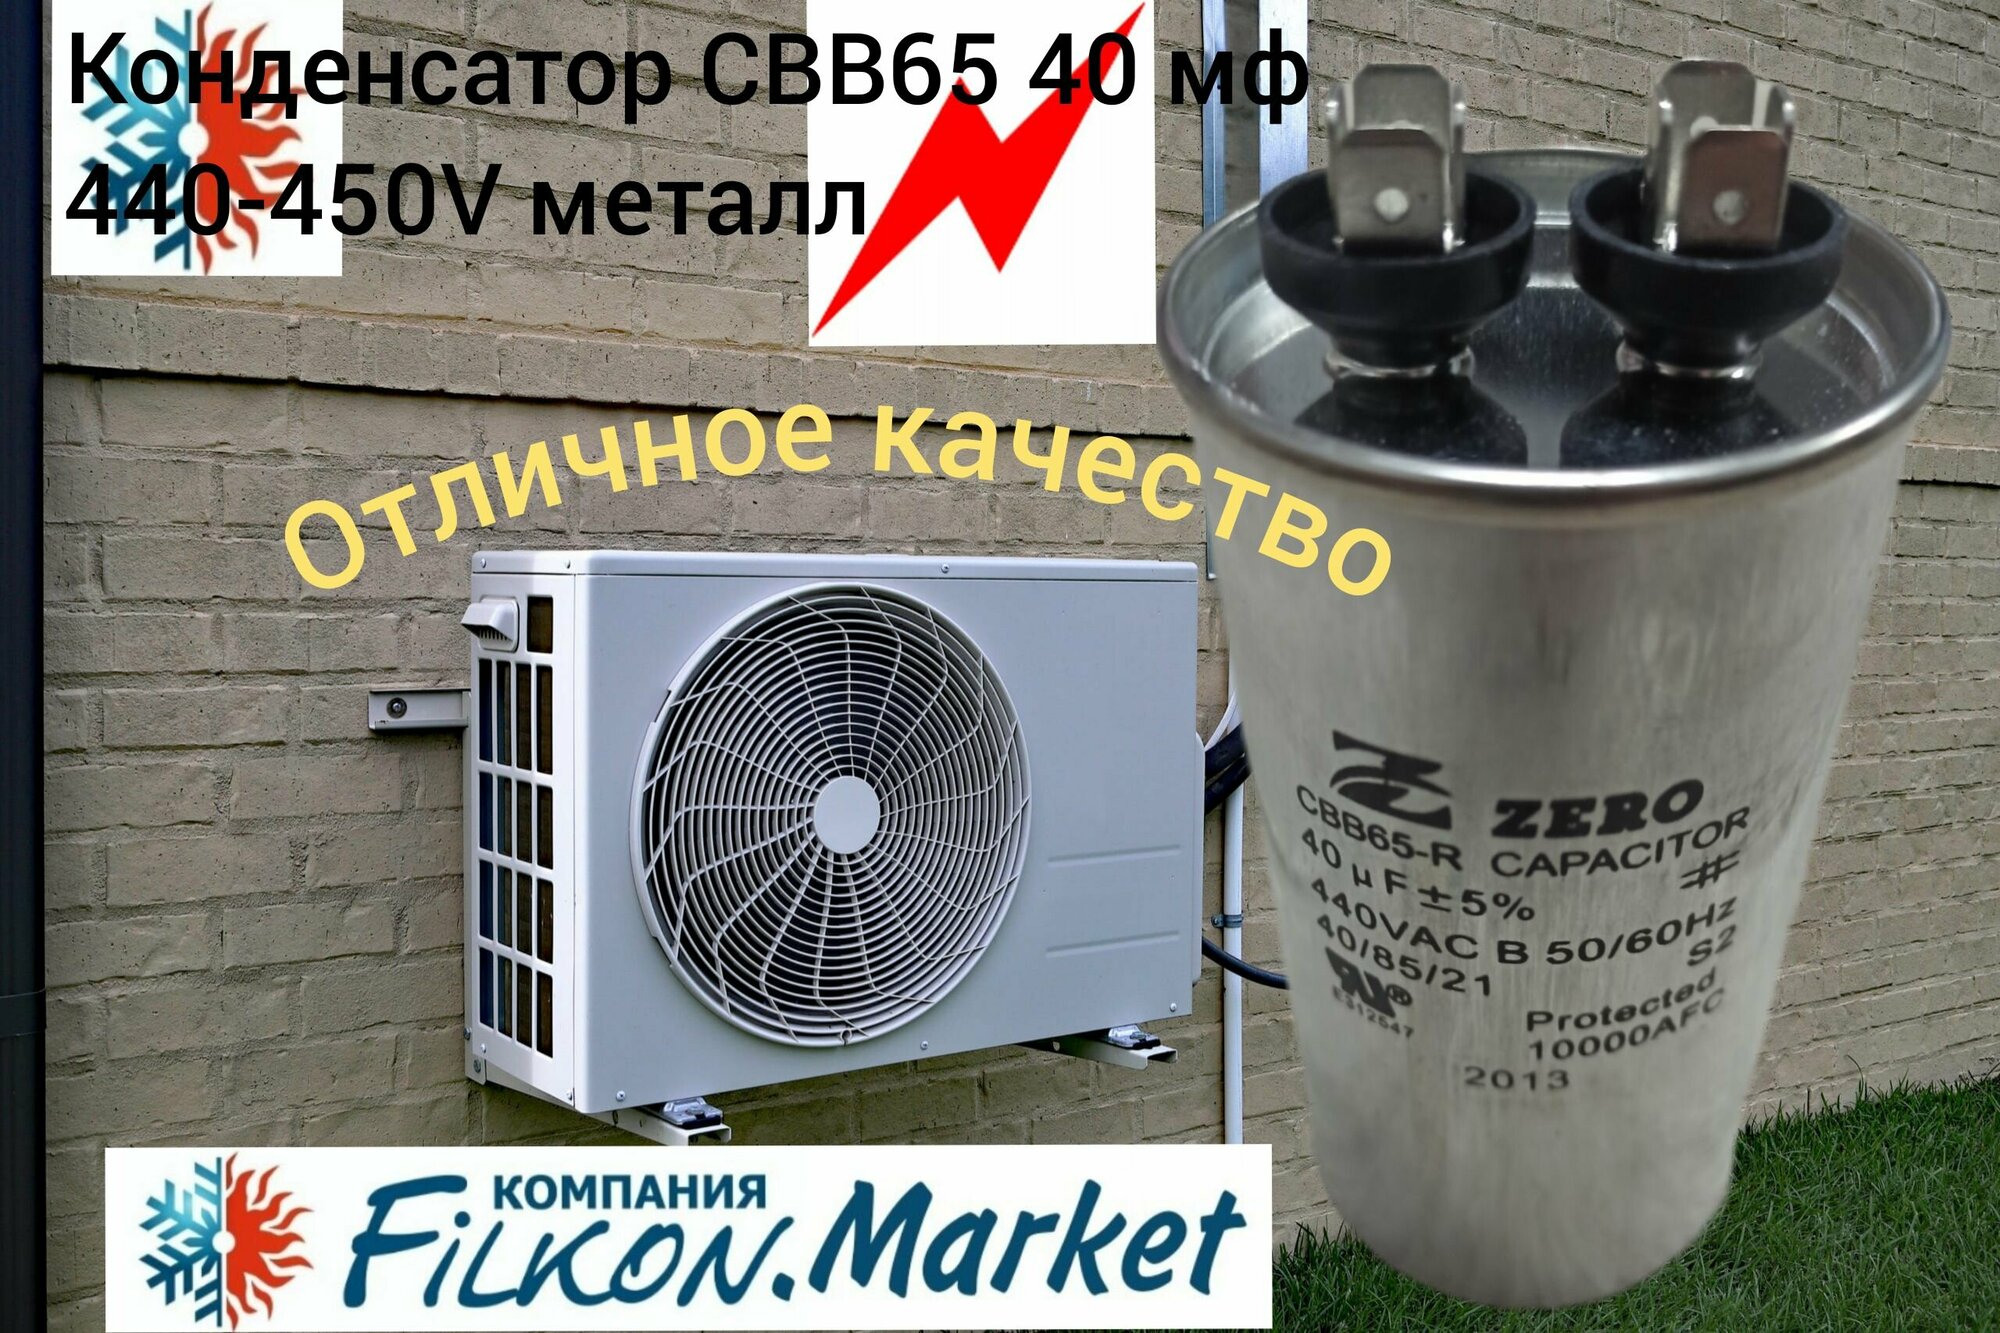 Конденсатор для кондиционера 40мф CBB65 440-450V металл